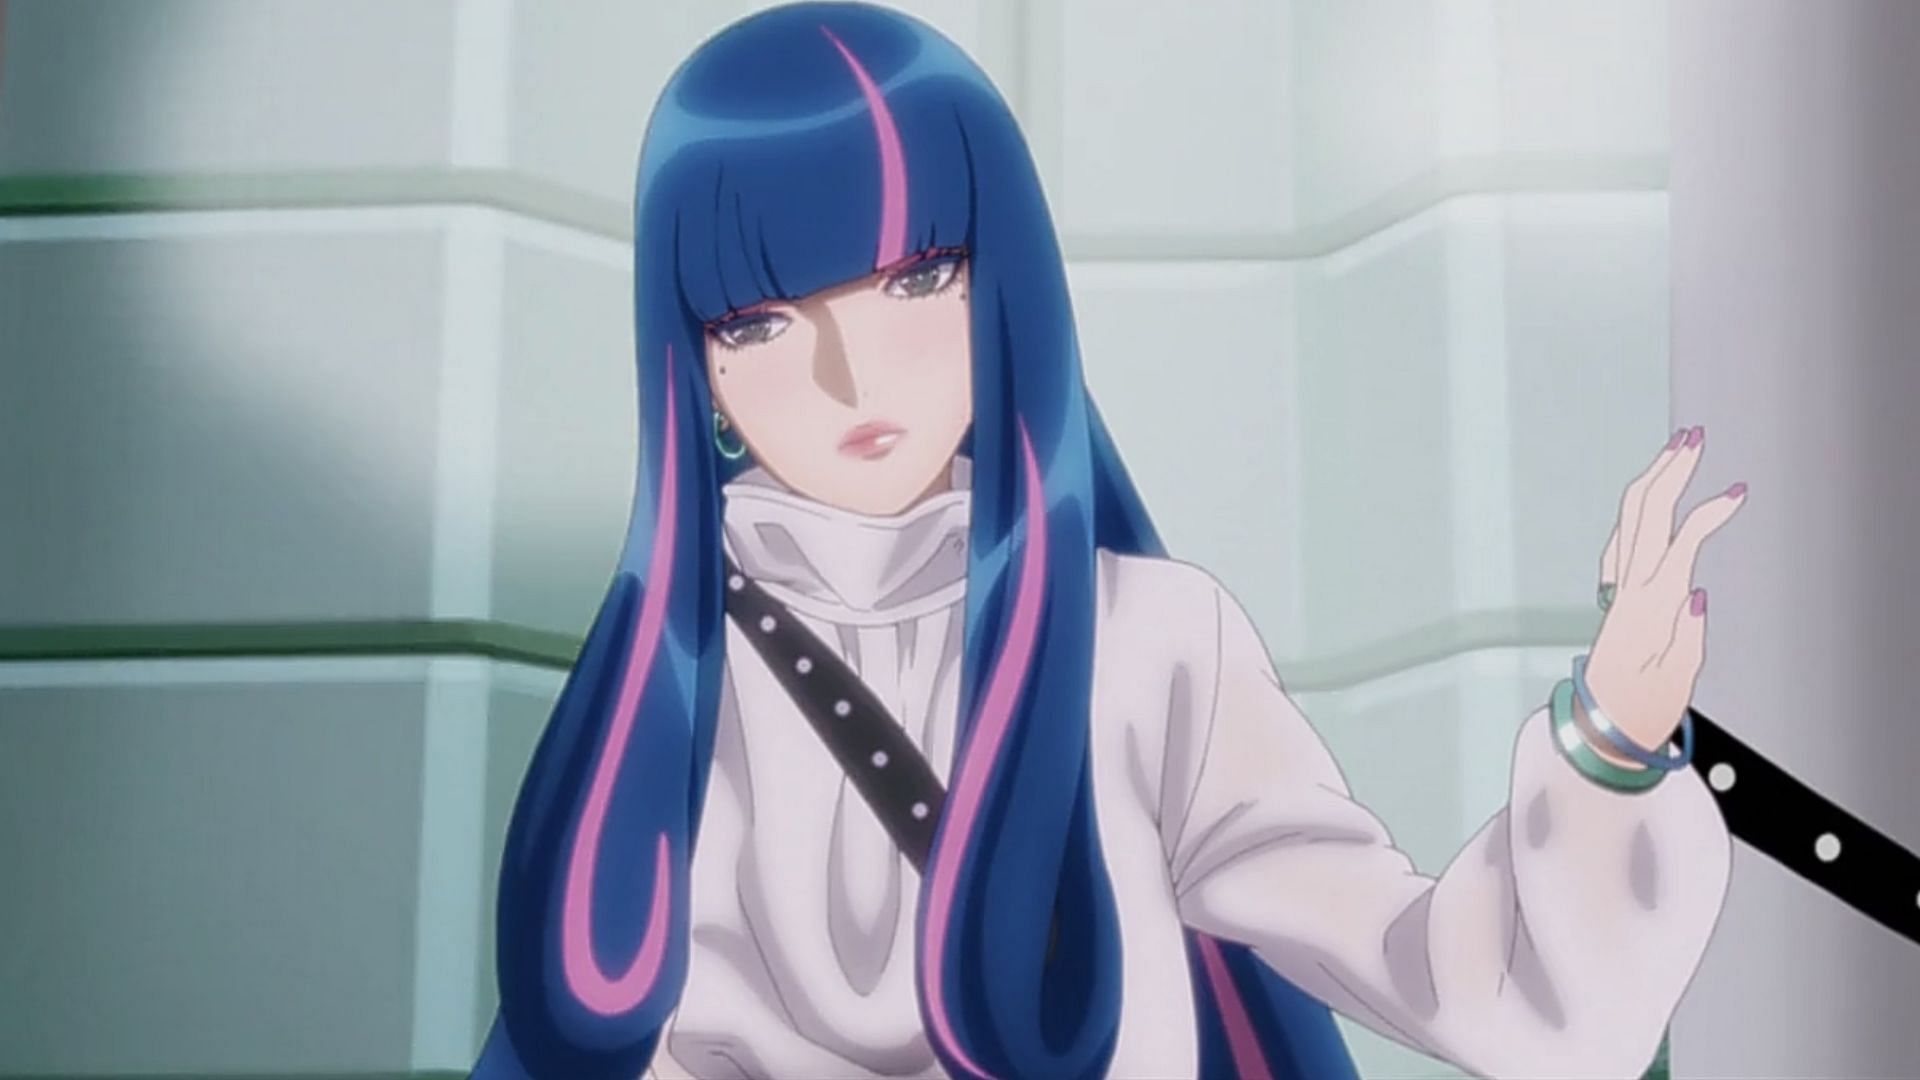 Eida as seen in the anime (image via Studio Pierrot)